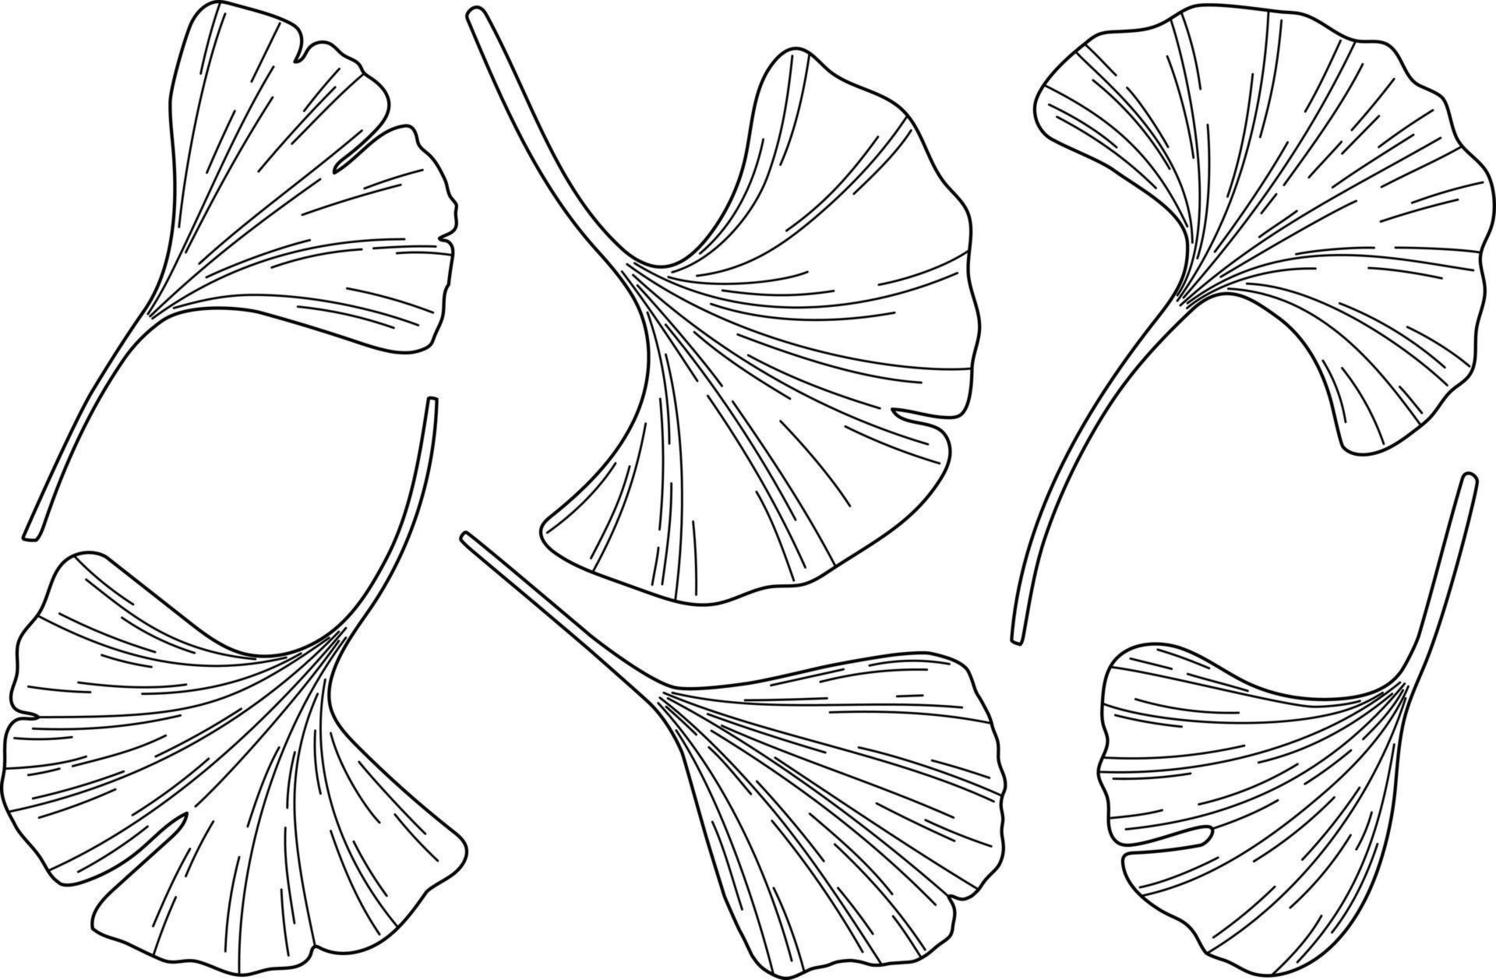 Ginkgo biloba leaves sketch vector